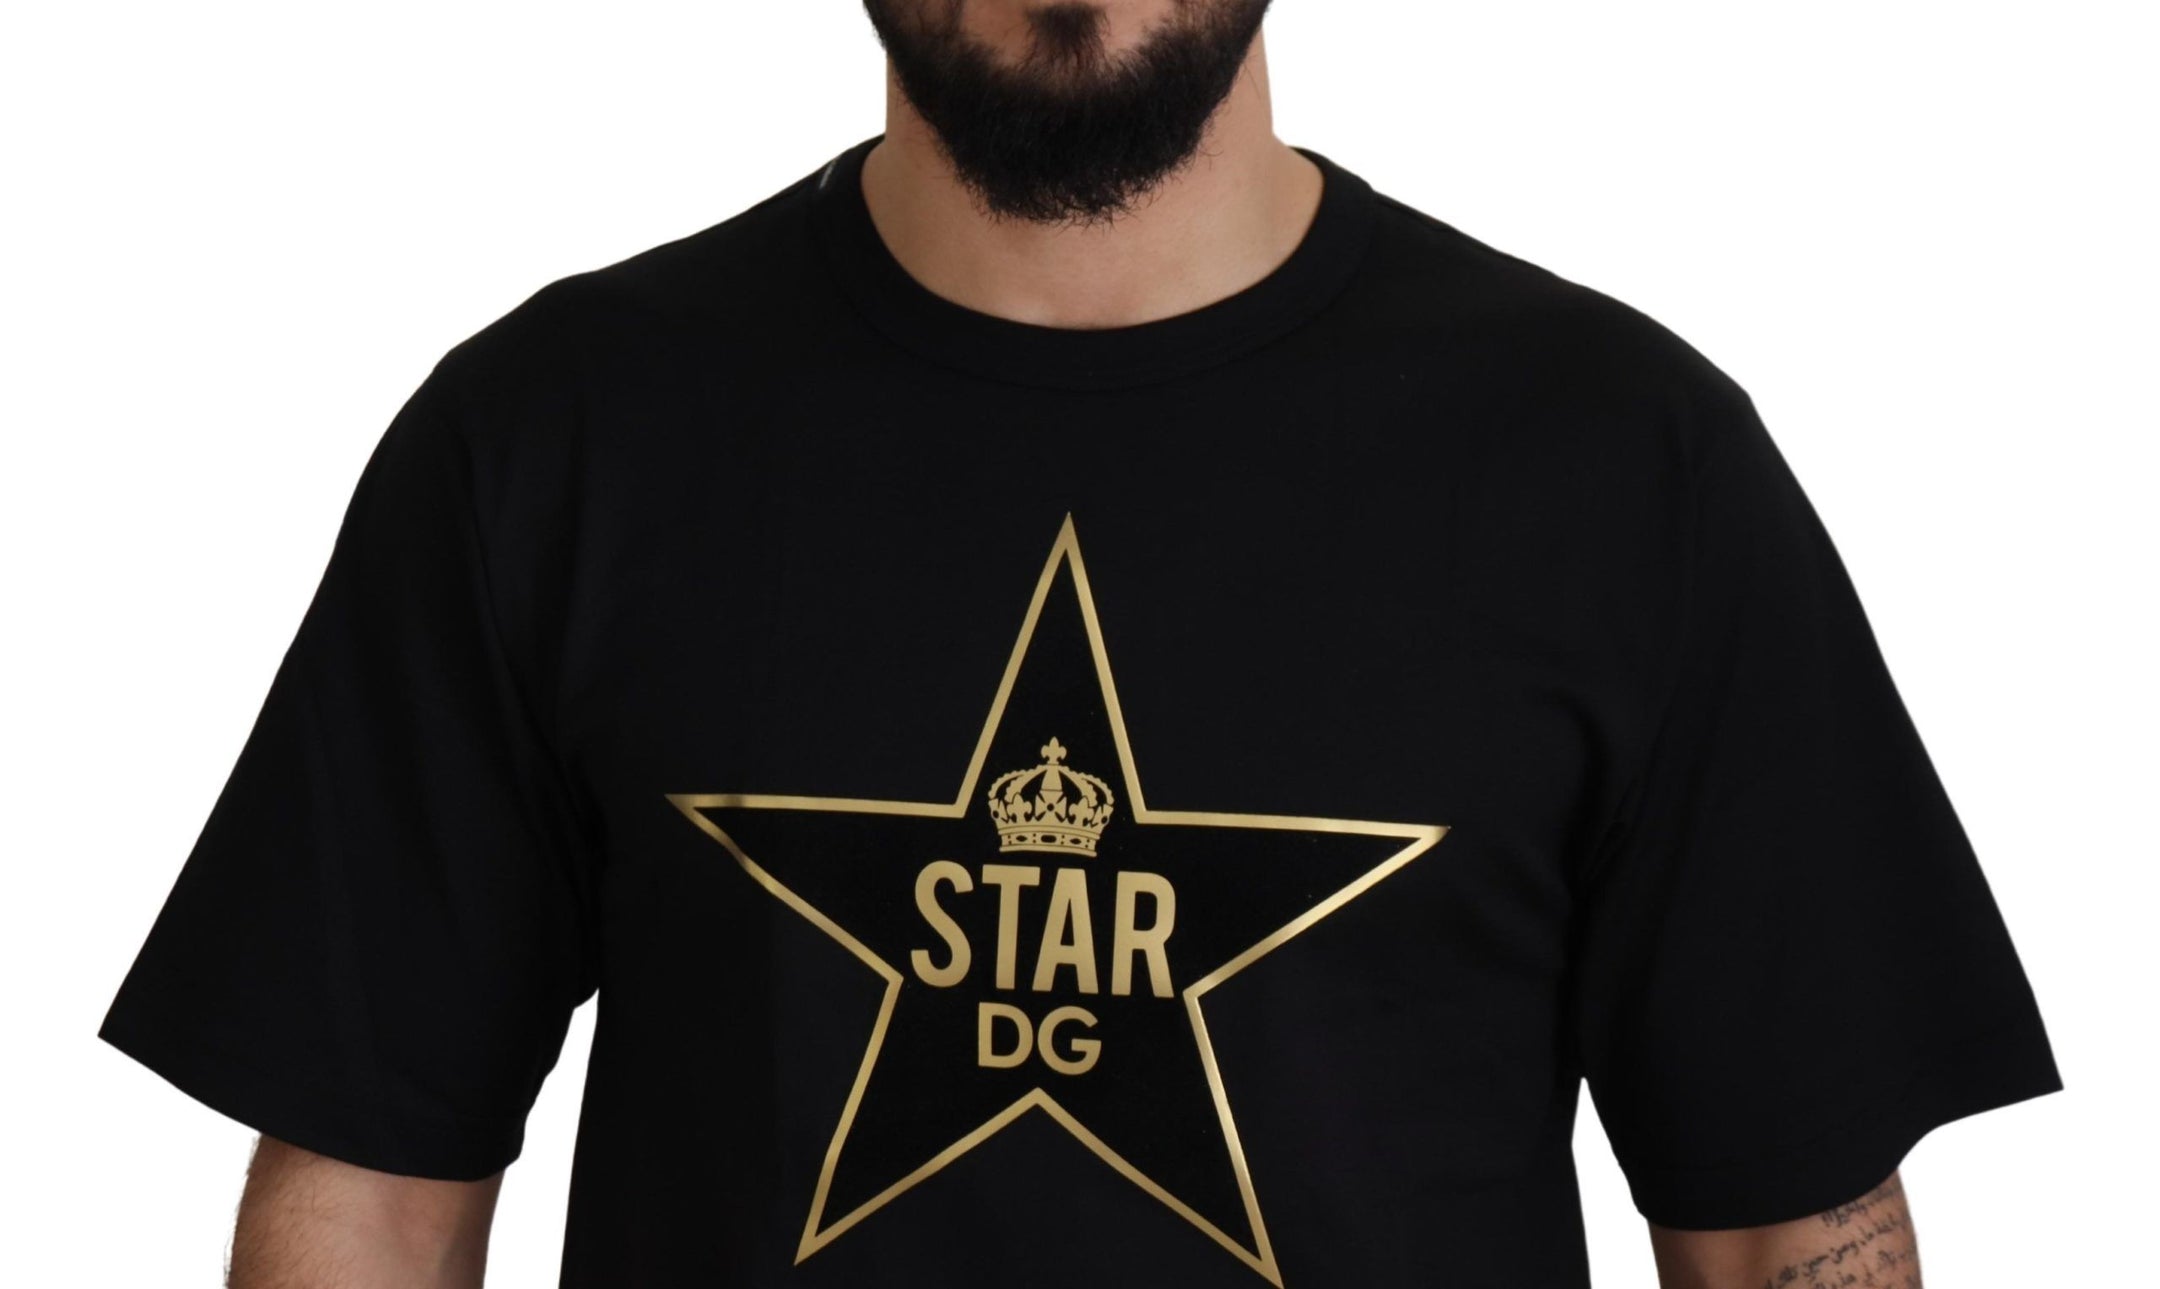 Gold Star DG Emblem Crewneck Tee